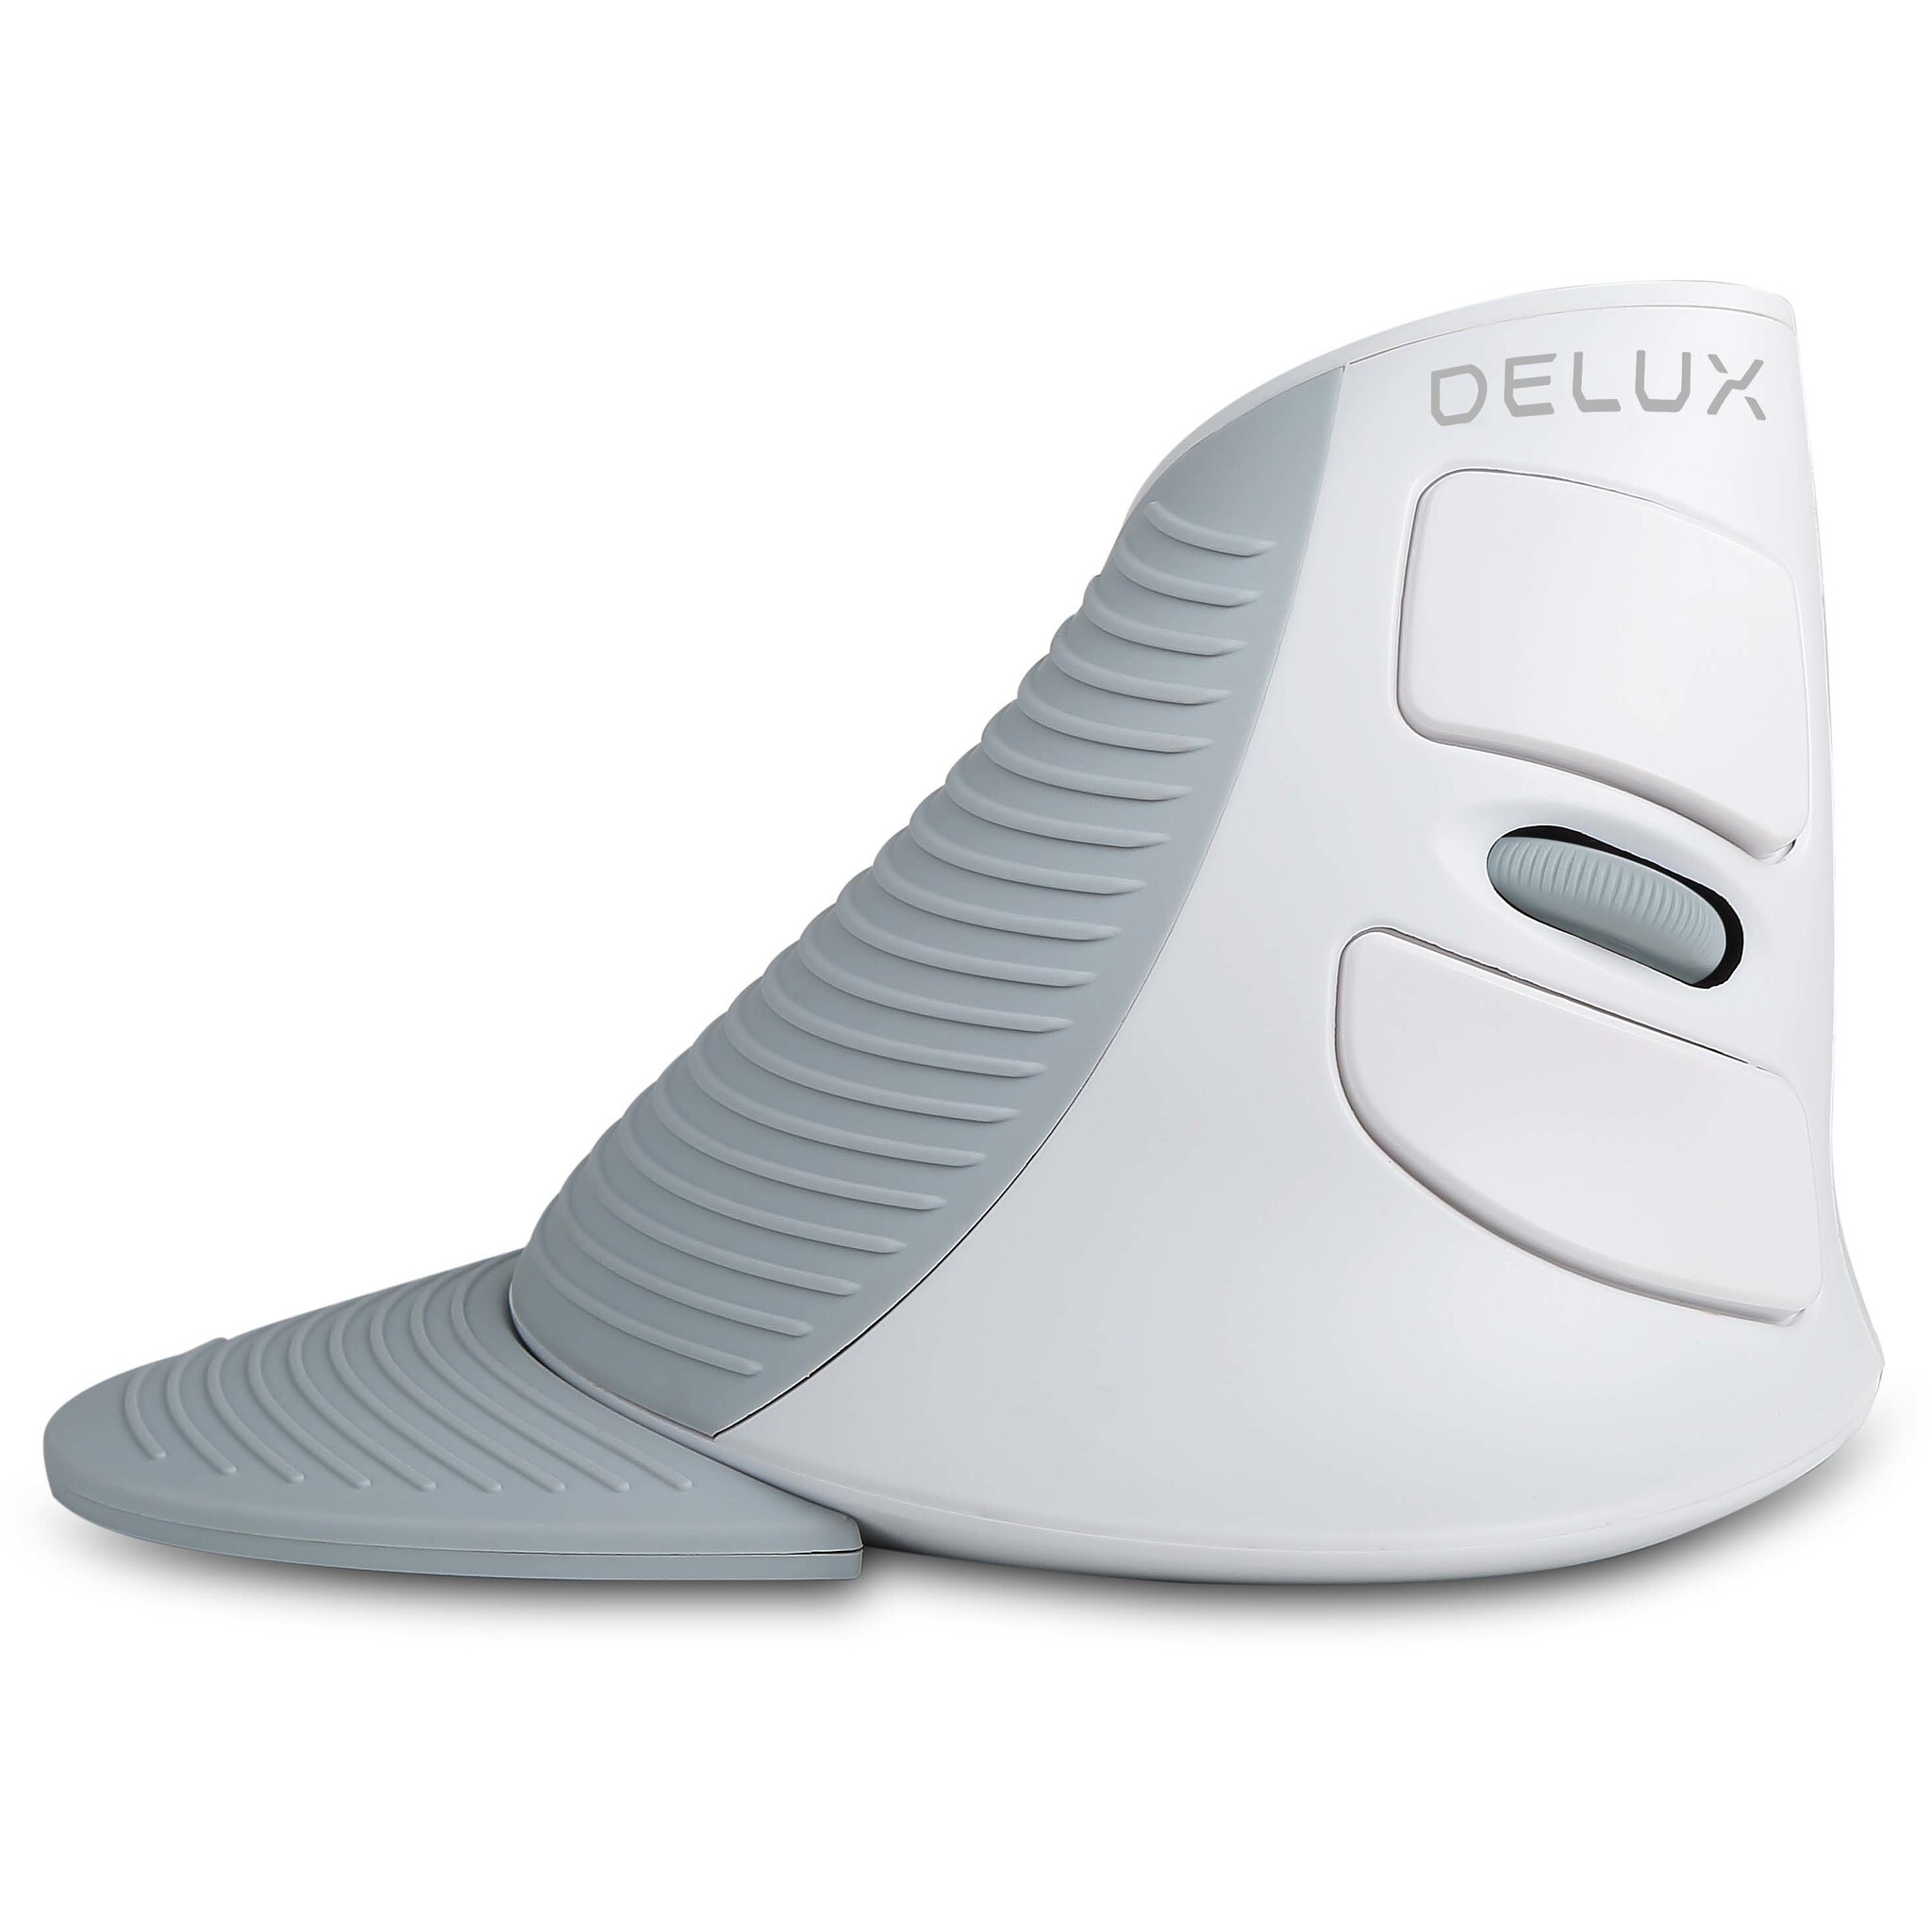 Delux Wow Grip Mouse draadloos rechtshandig - wit